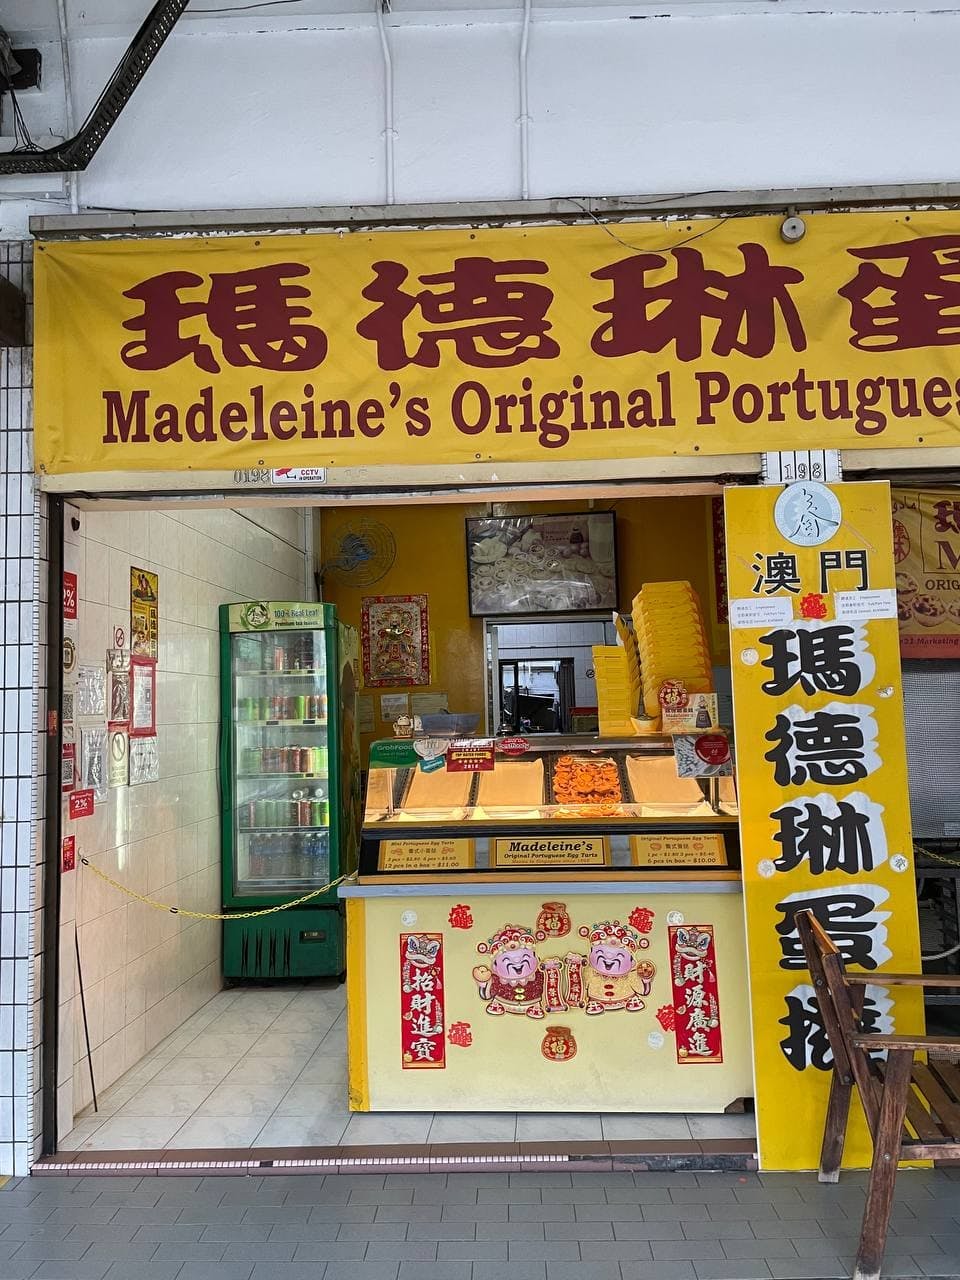 The famous Madeleine's Original Portuguese Egg Tarts